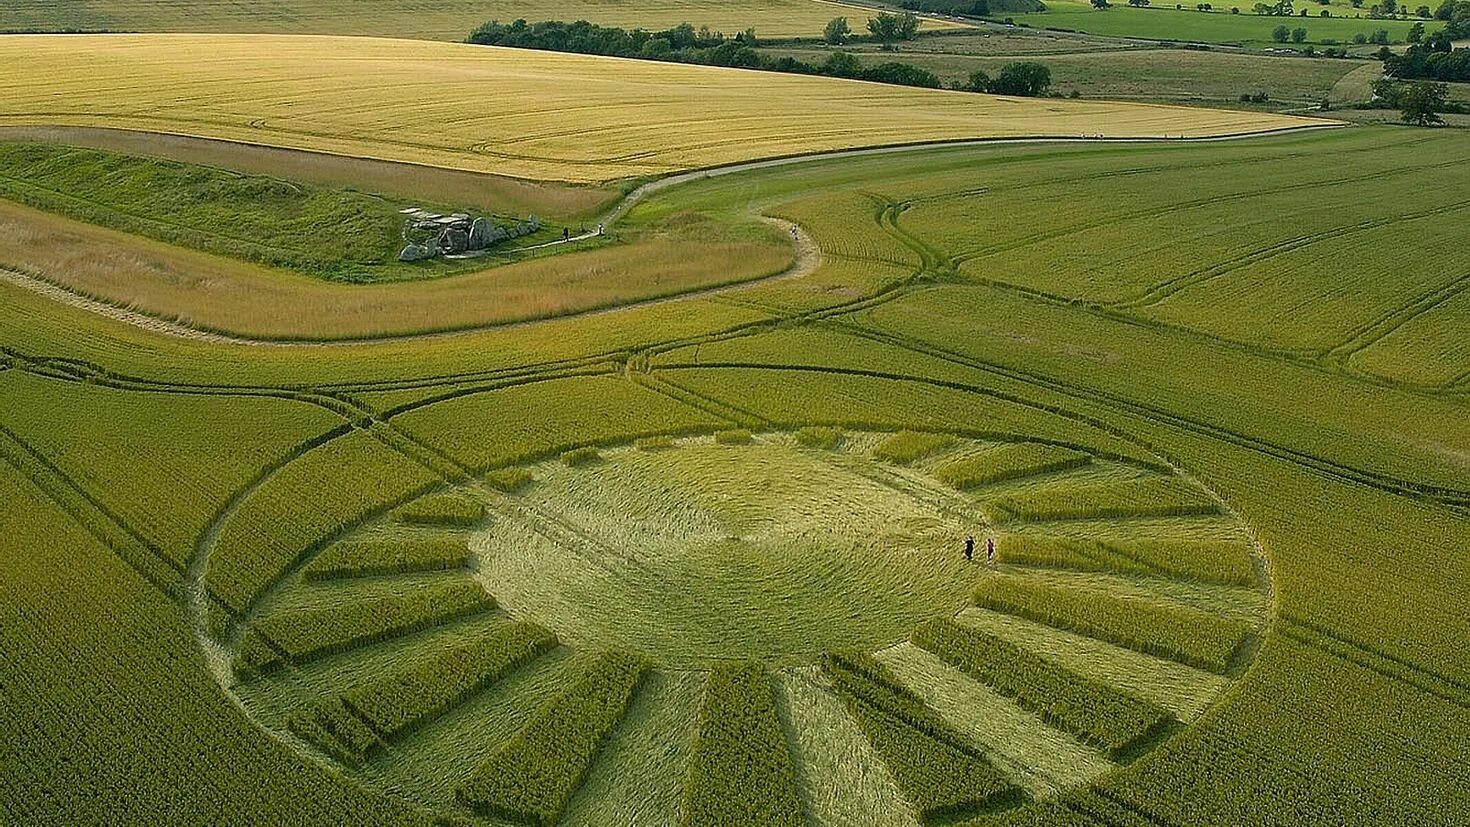 Круги на полях в Краснодарском крае 2021. Уилтшир,,круги на полях. Круги на кукурузных полях. В поле. Поле бесполезных